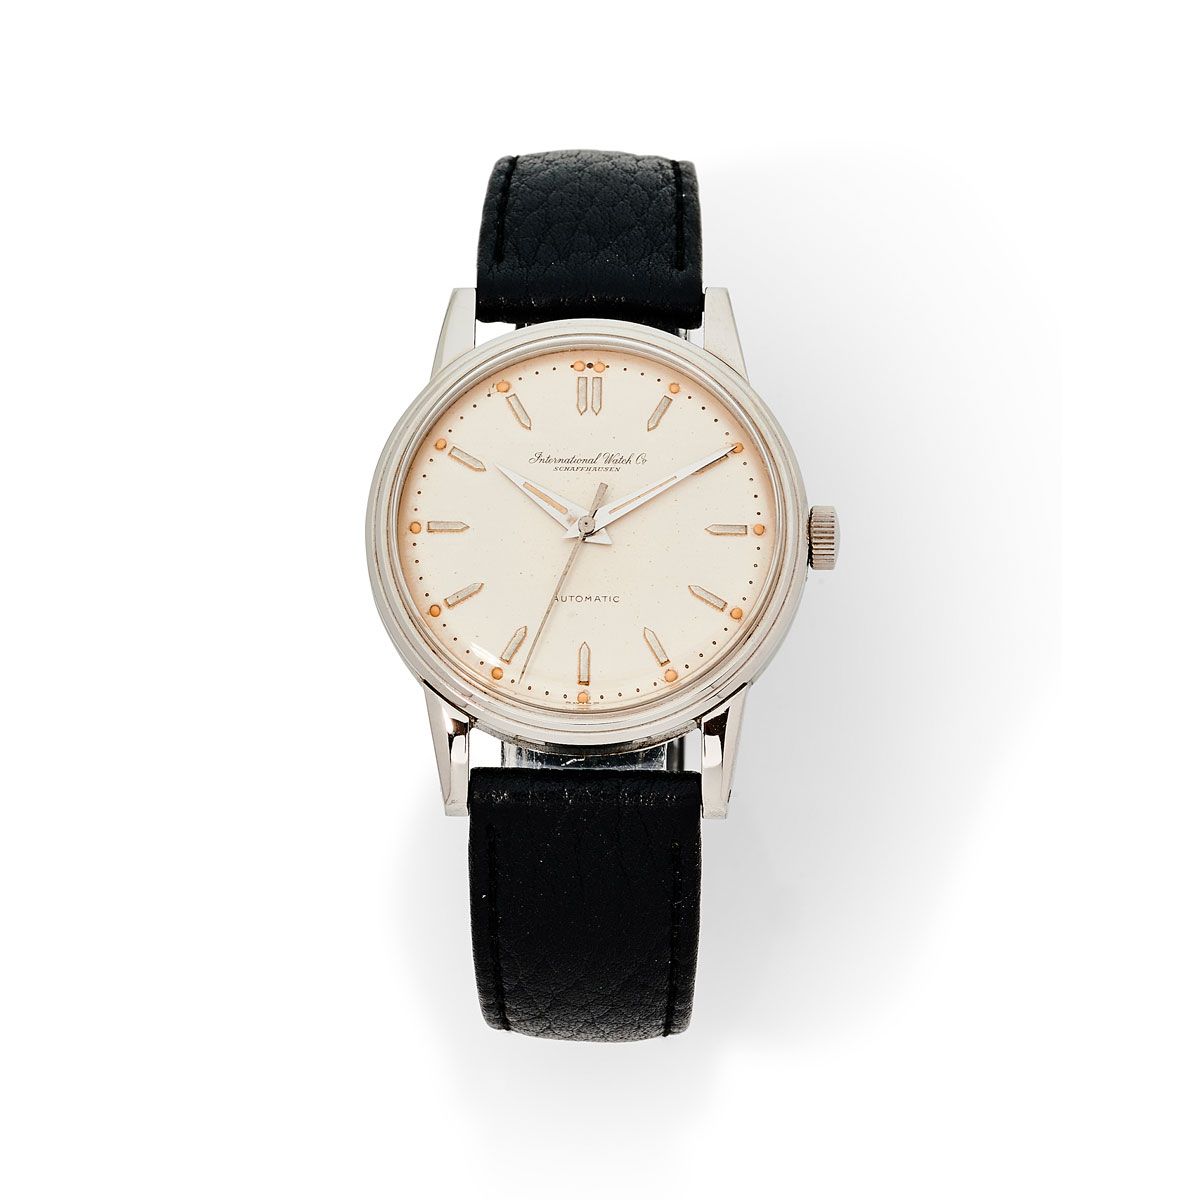 Null International Watch Co, n. 1382675, 1955 circa.

Raffinato orologio classic&hellip;